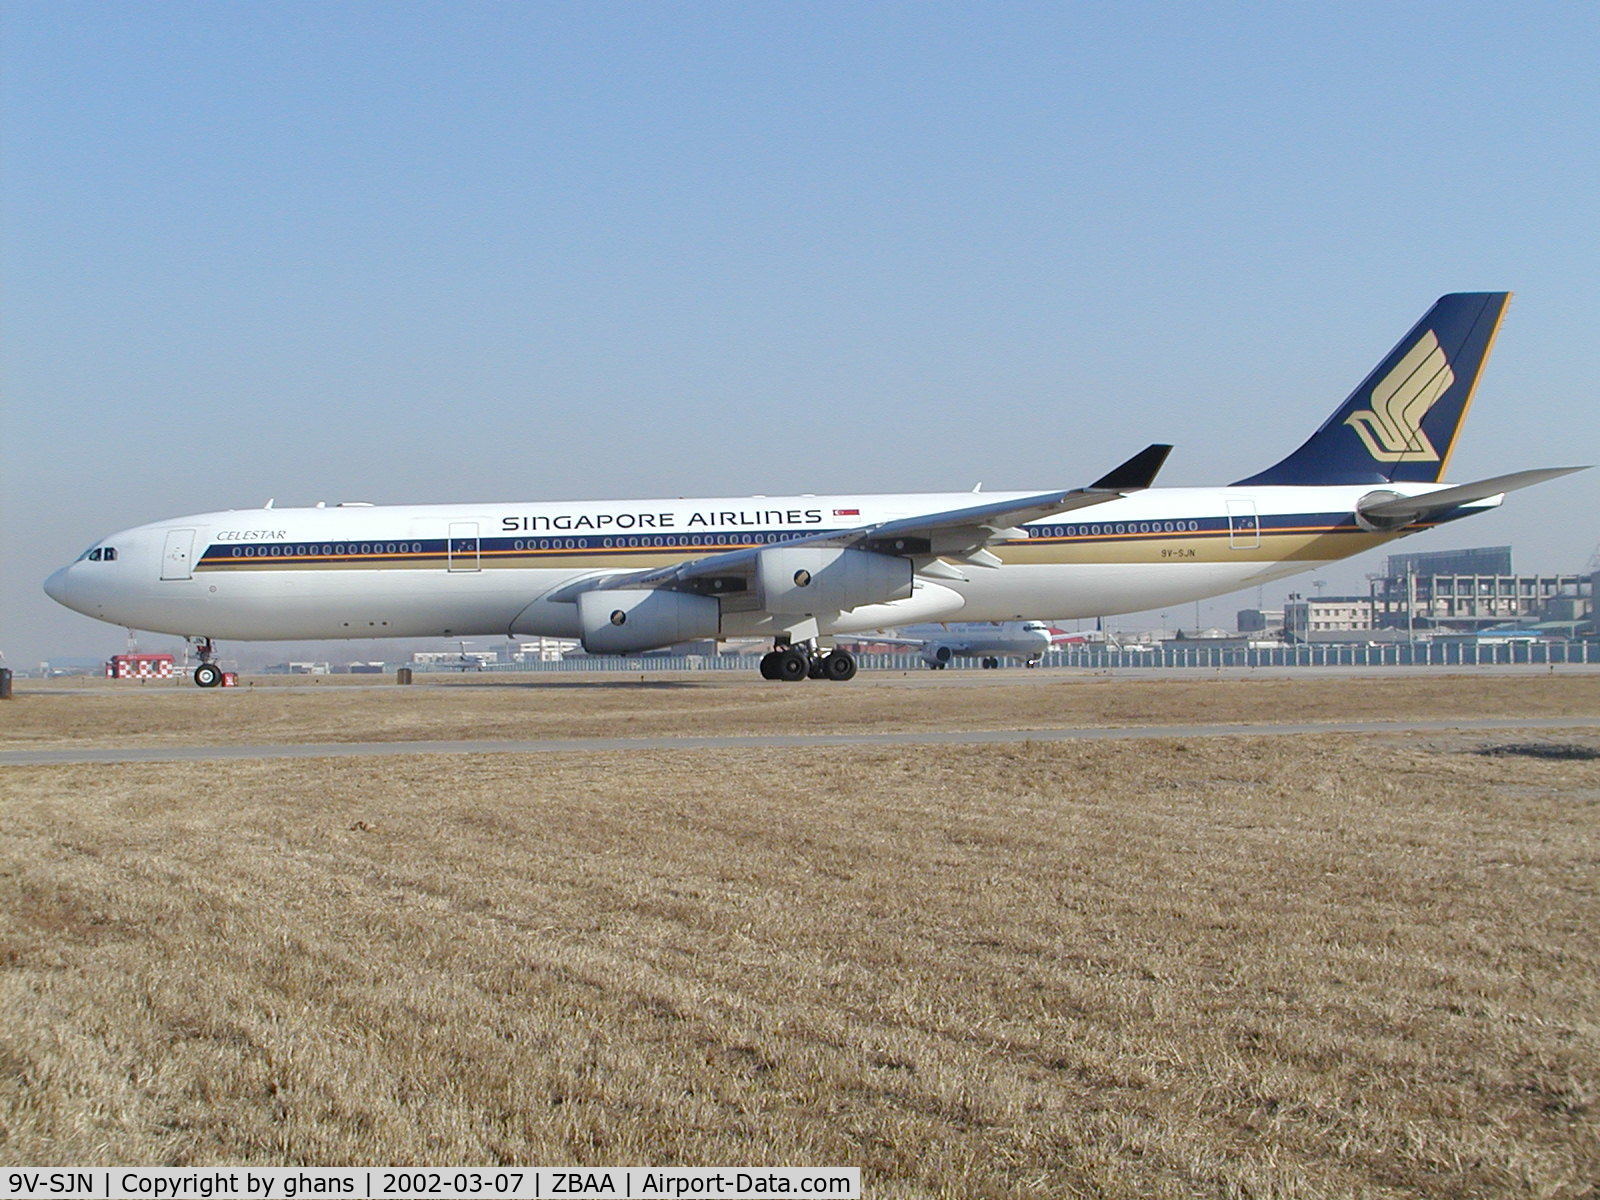 9V-SJN, 1998 Airbus A340-313X C/N 236, Holding short runway